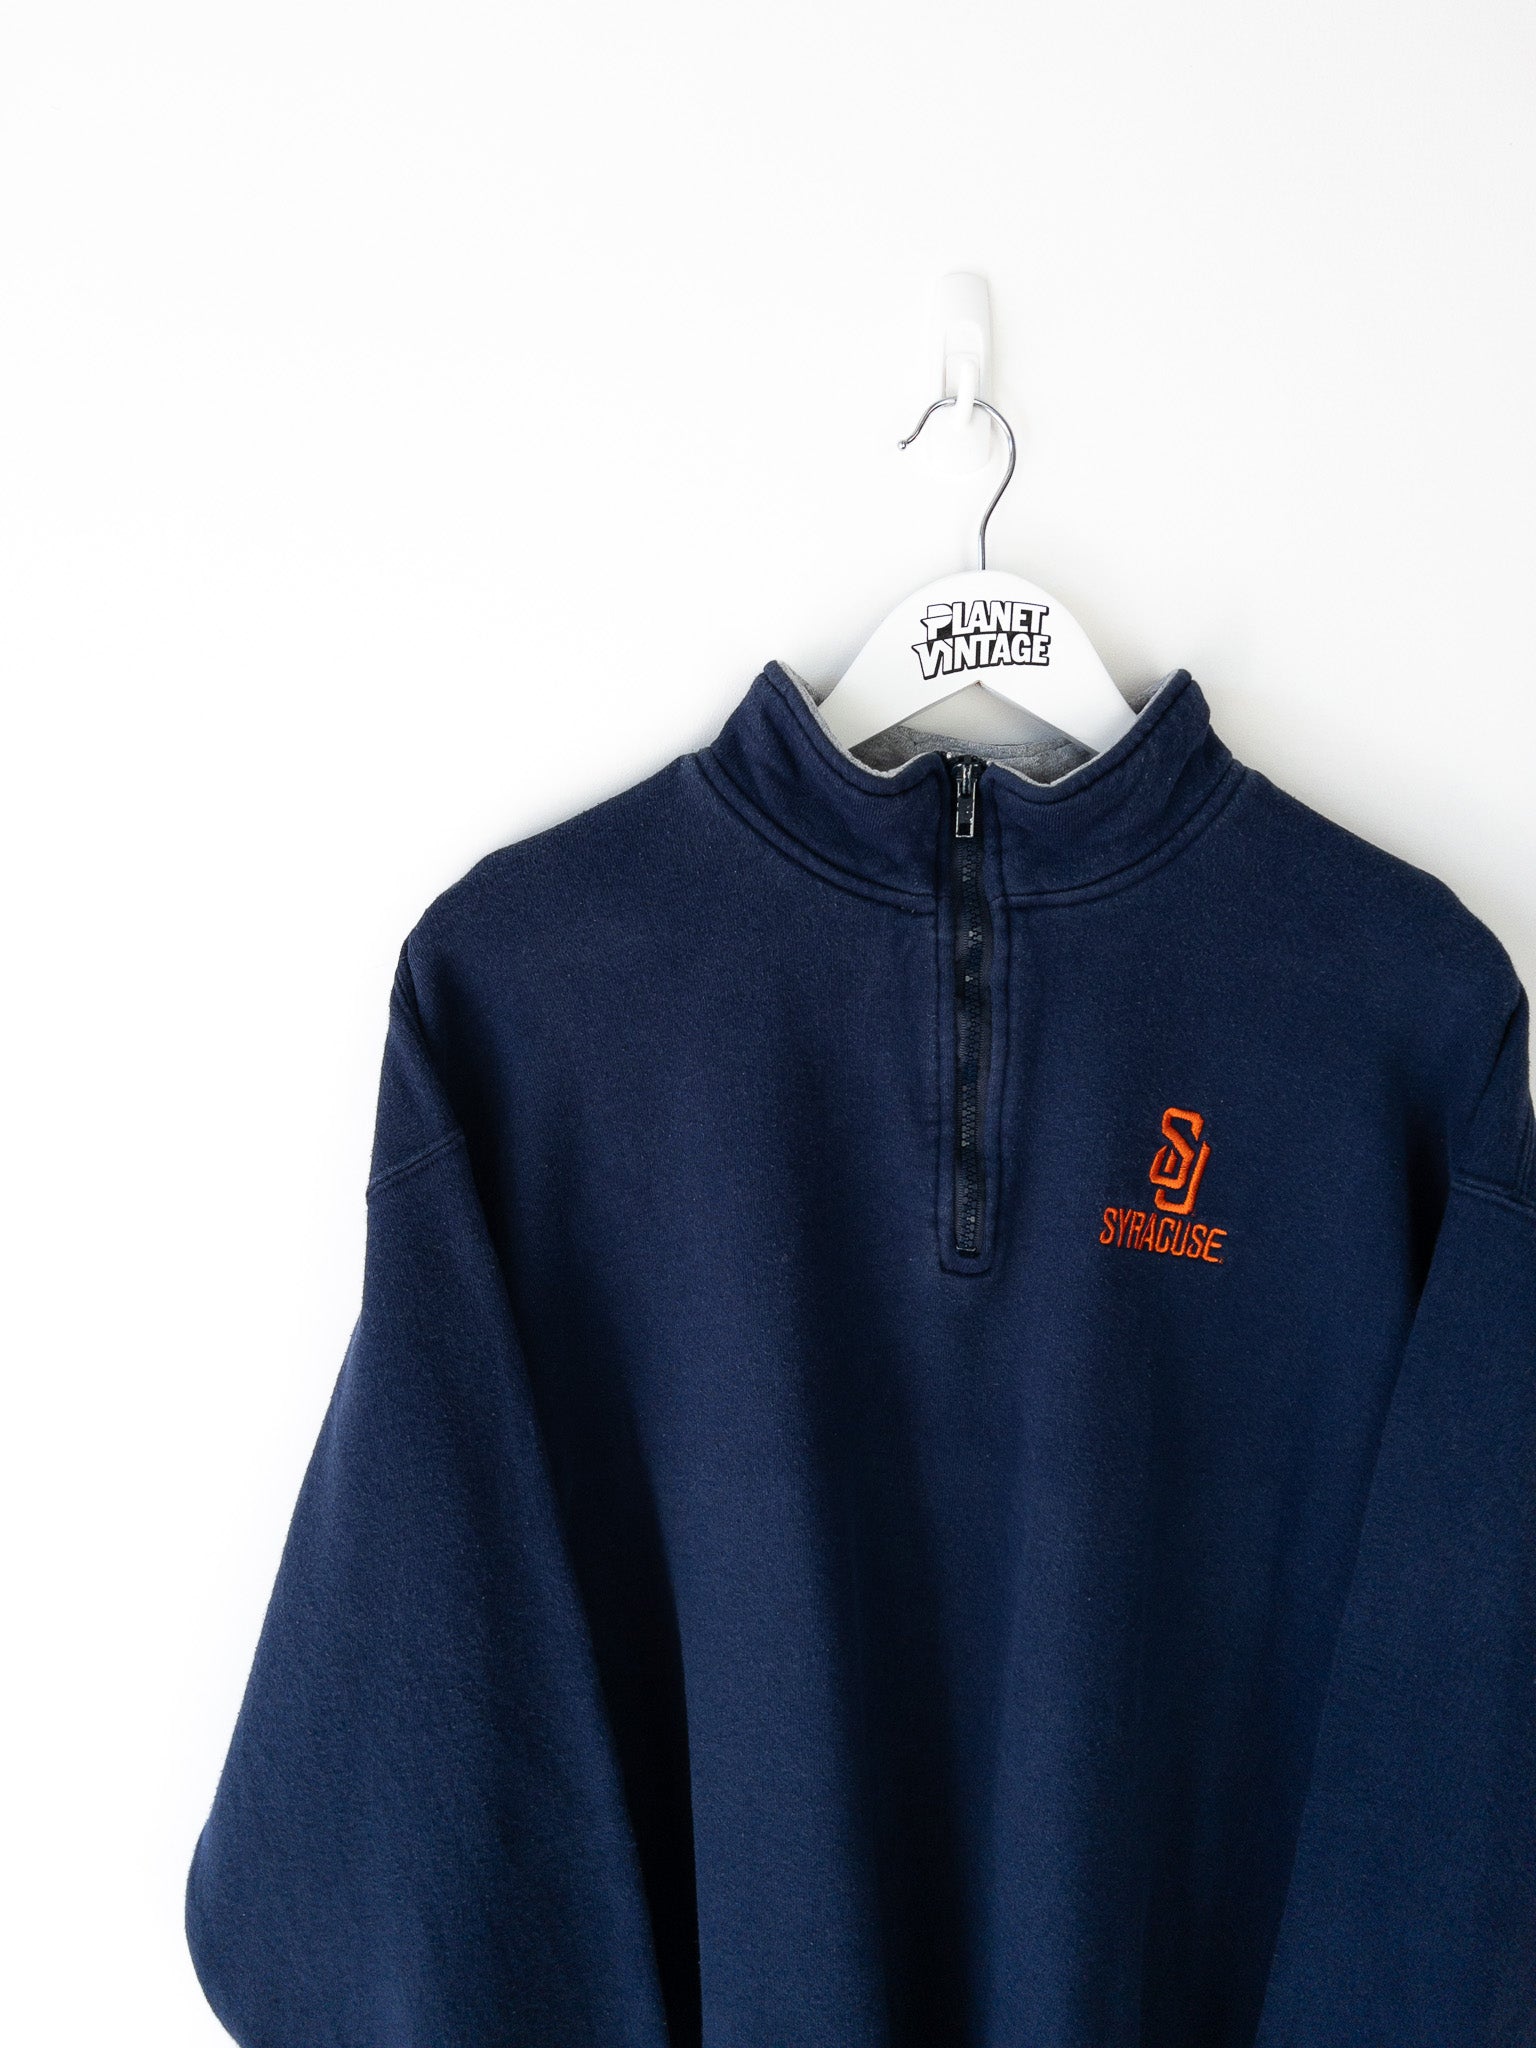 Vintage Syracuse University Quarter Zip Sweatshirt (XL)